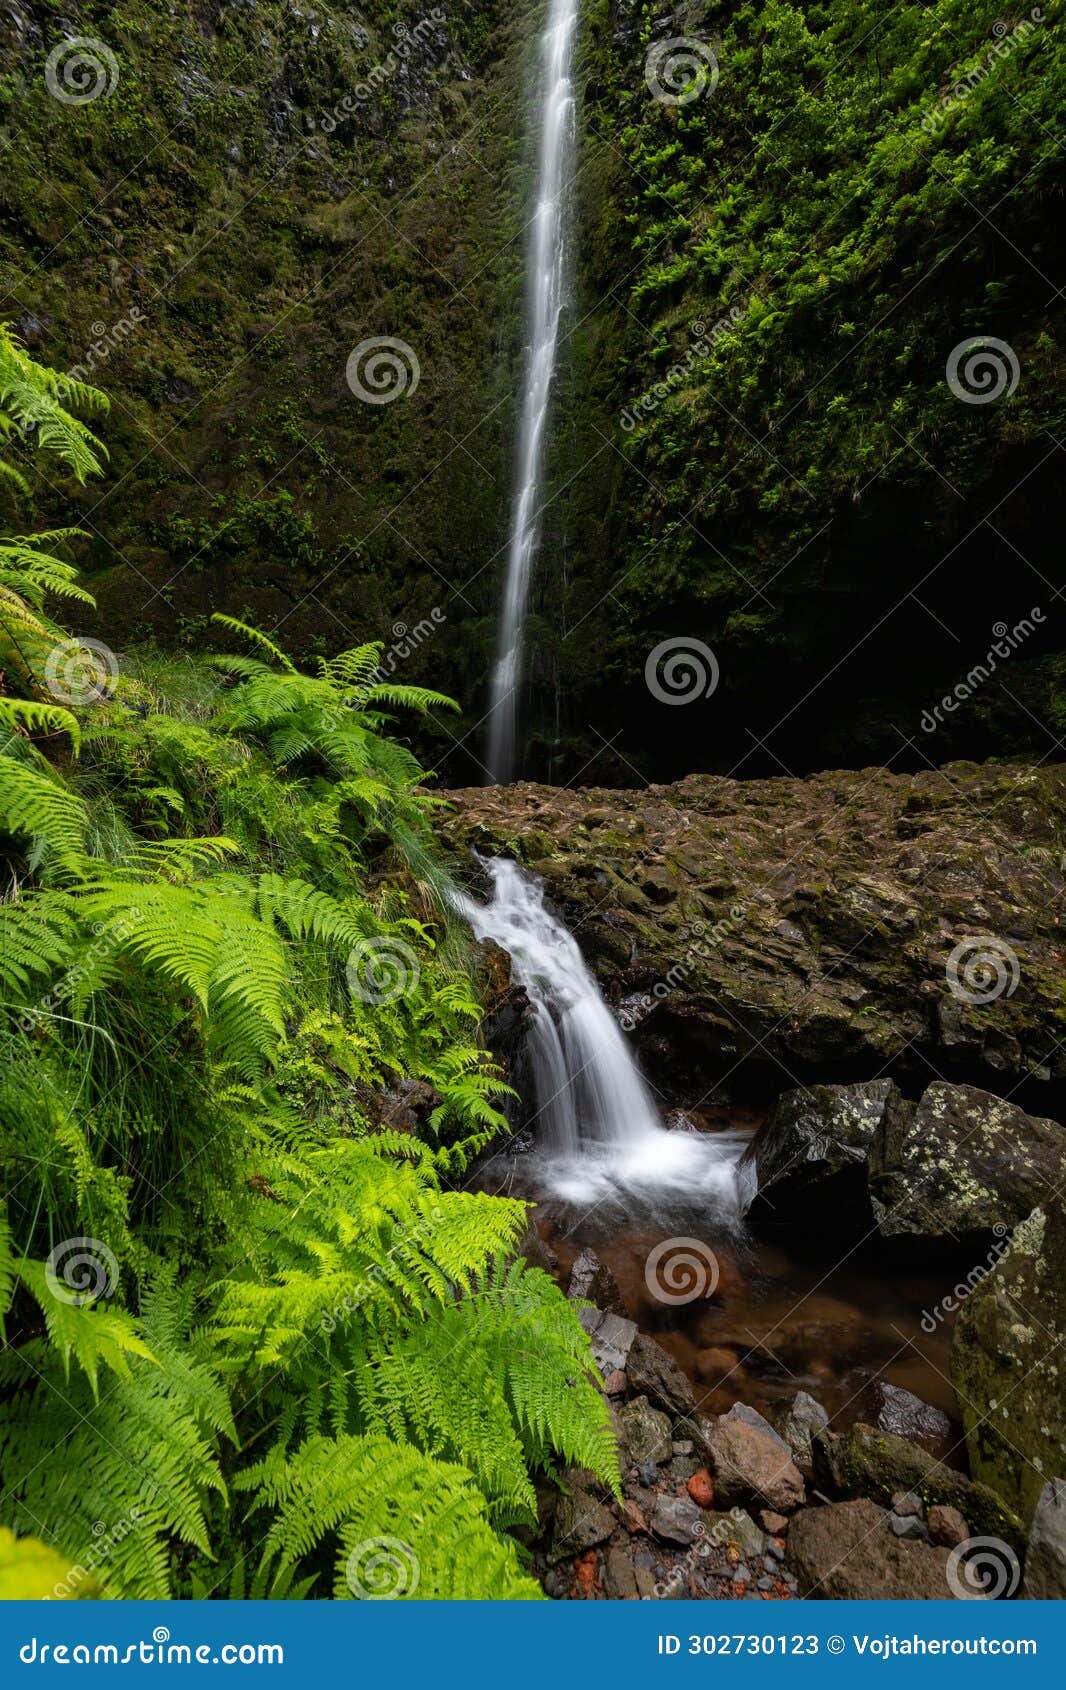 vertical photograph of a small cascade under the main waterfall of caldeirao verde valley.